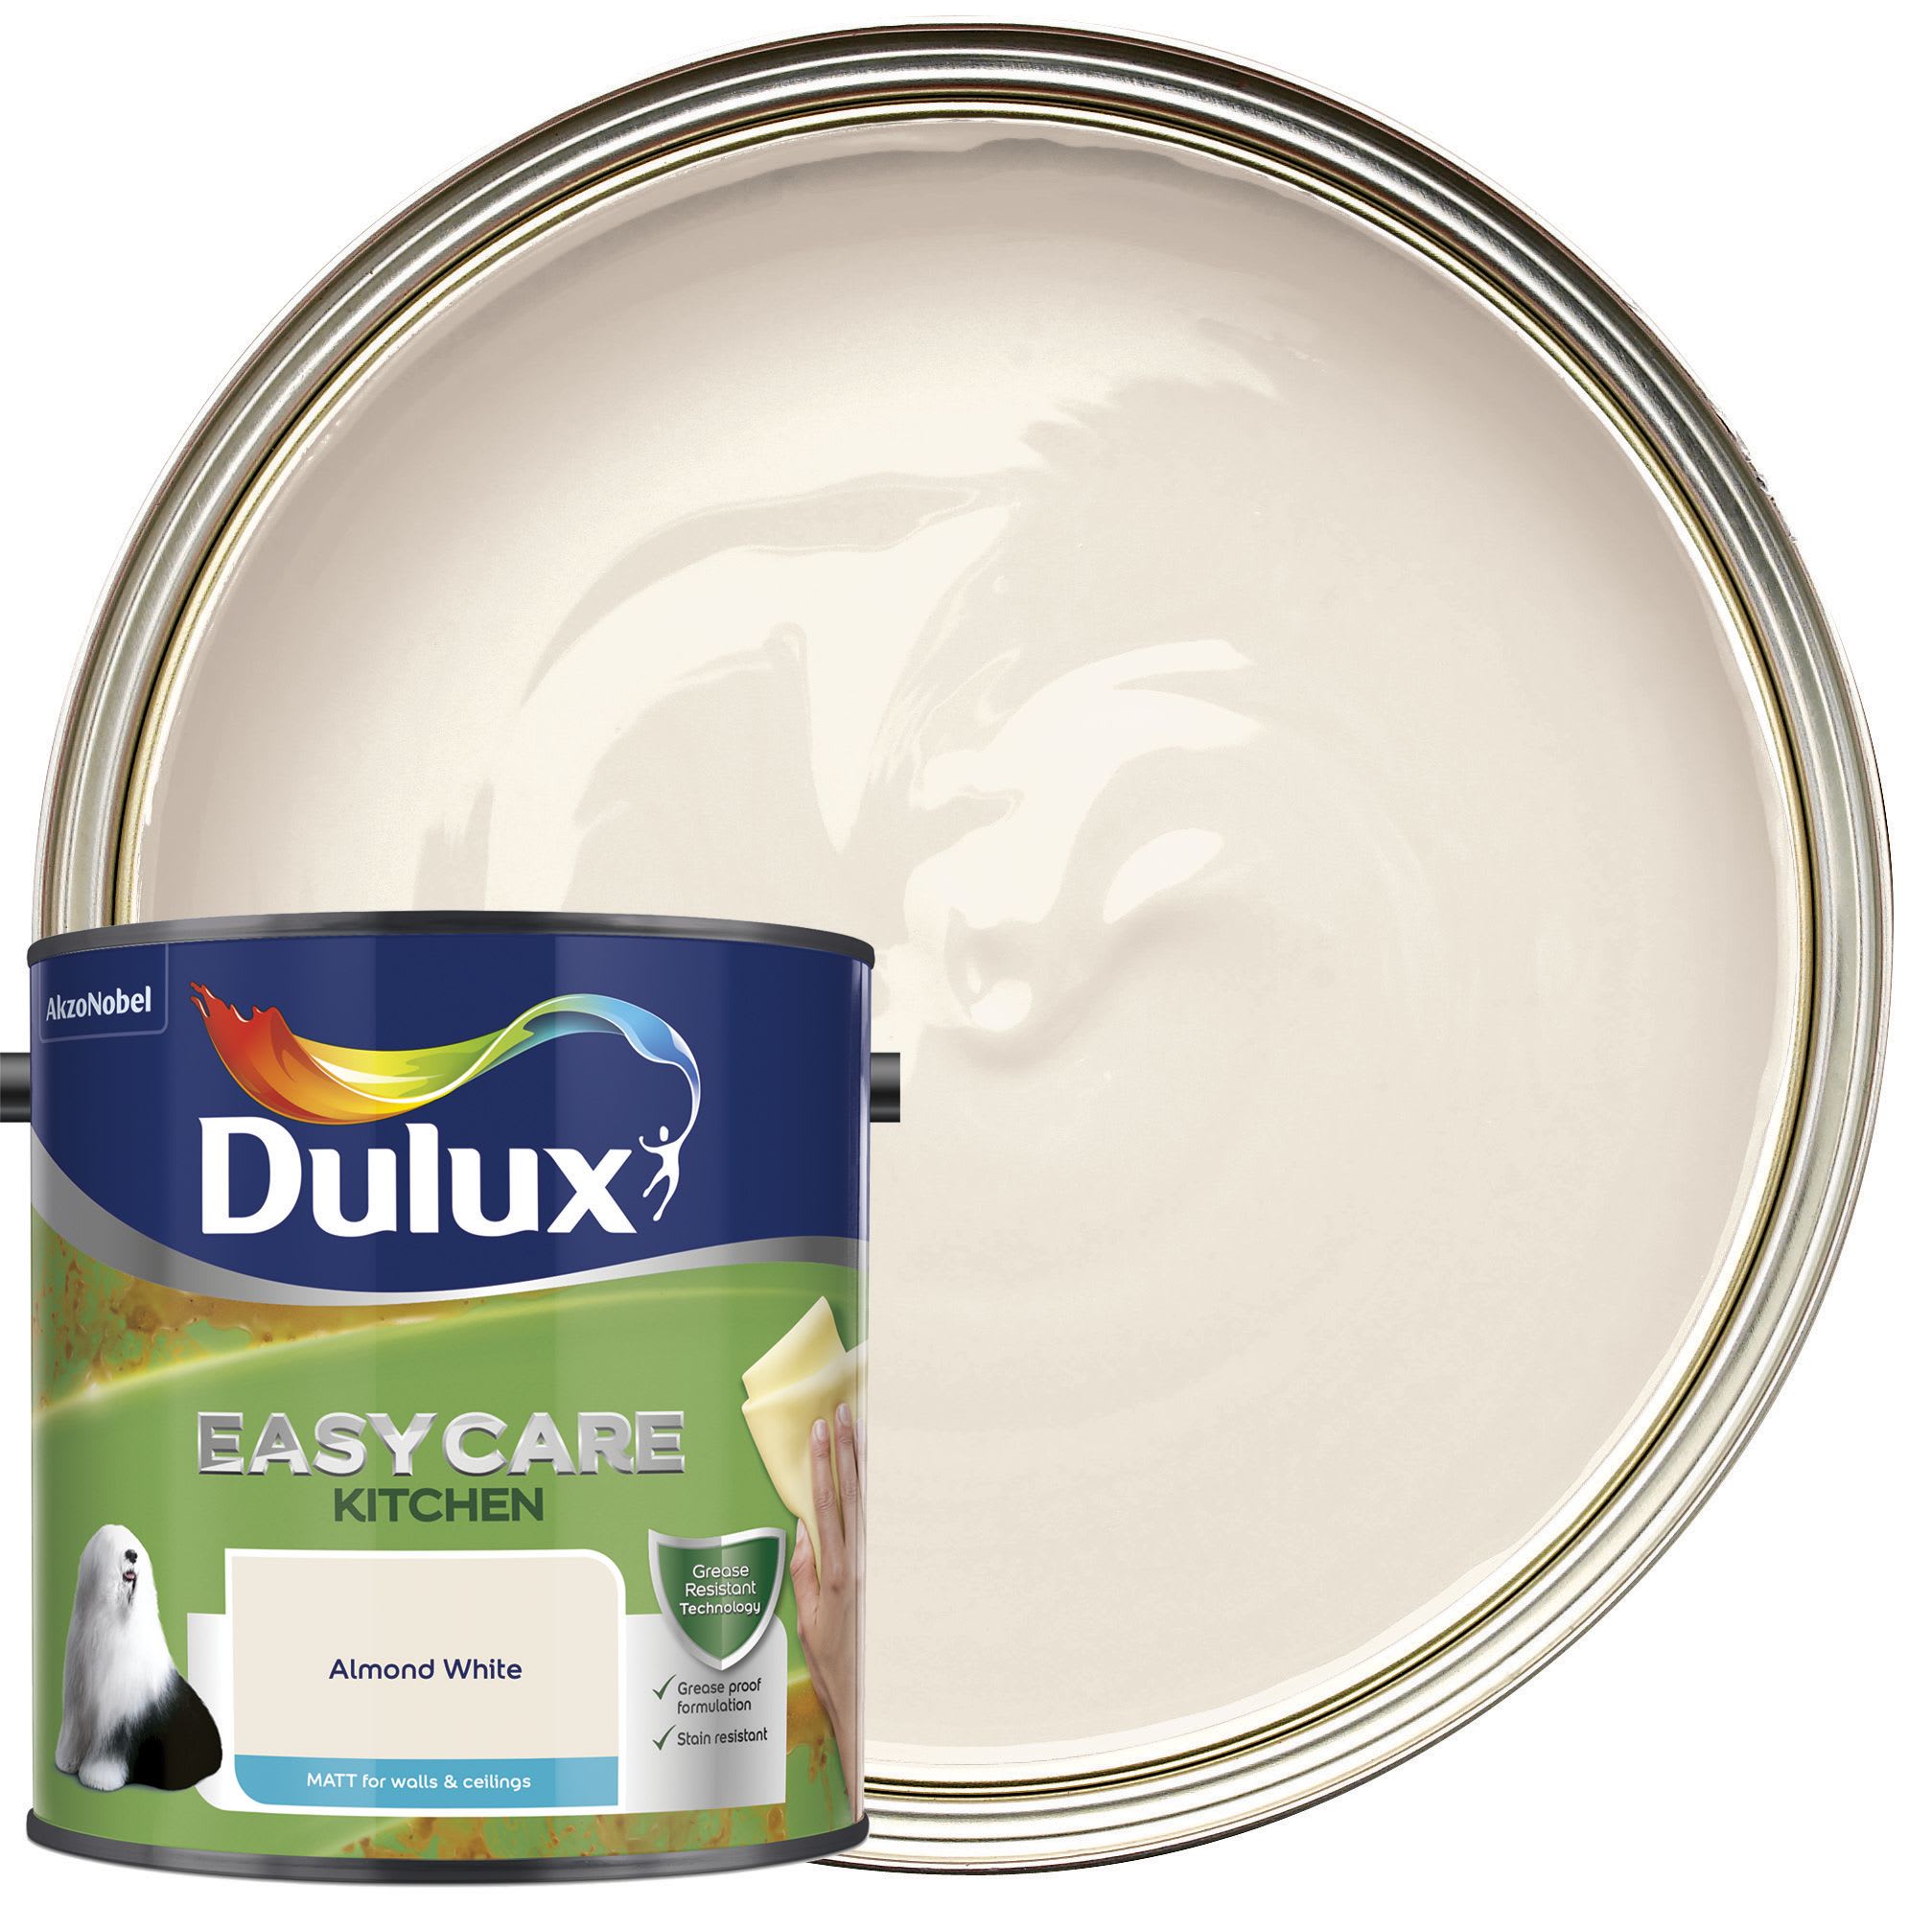 Dulux Easycare Kitchen Matt Emulsion Paint - Almond